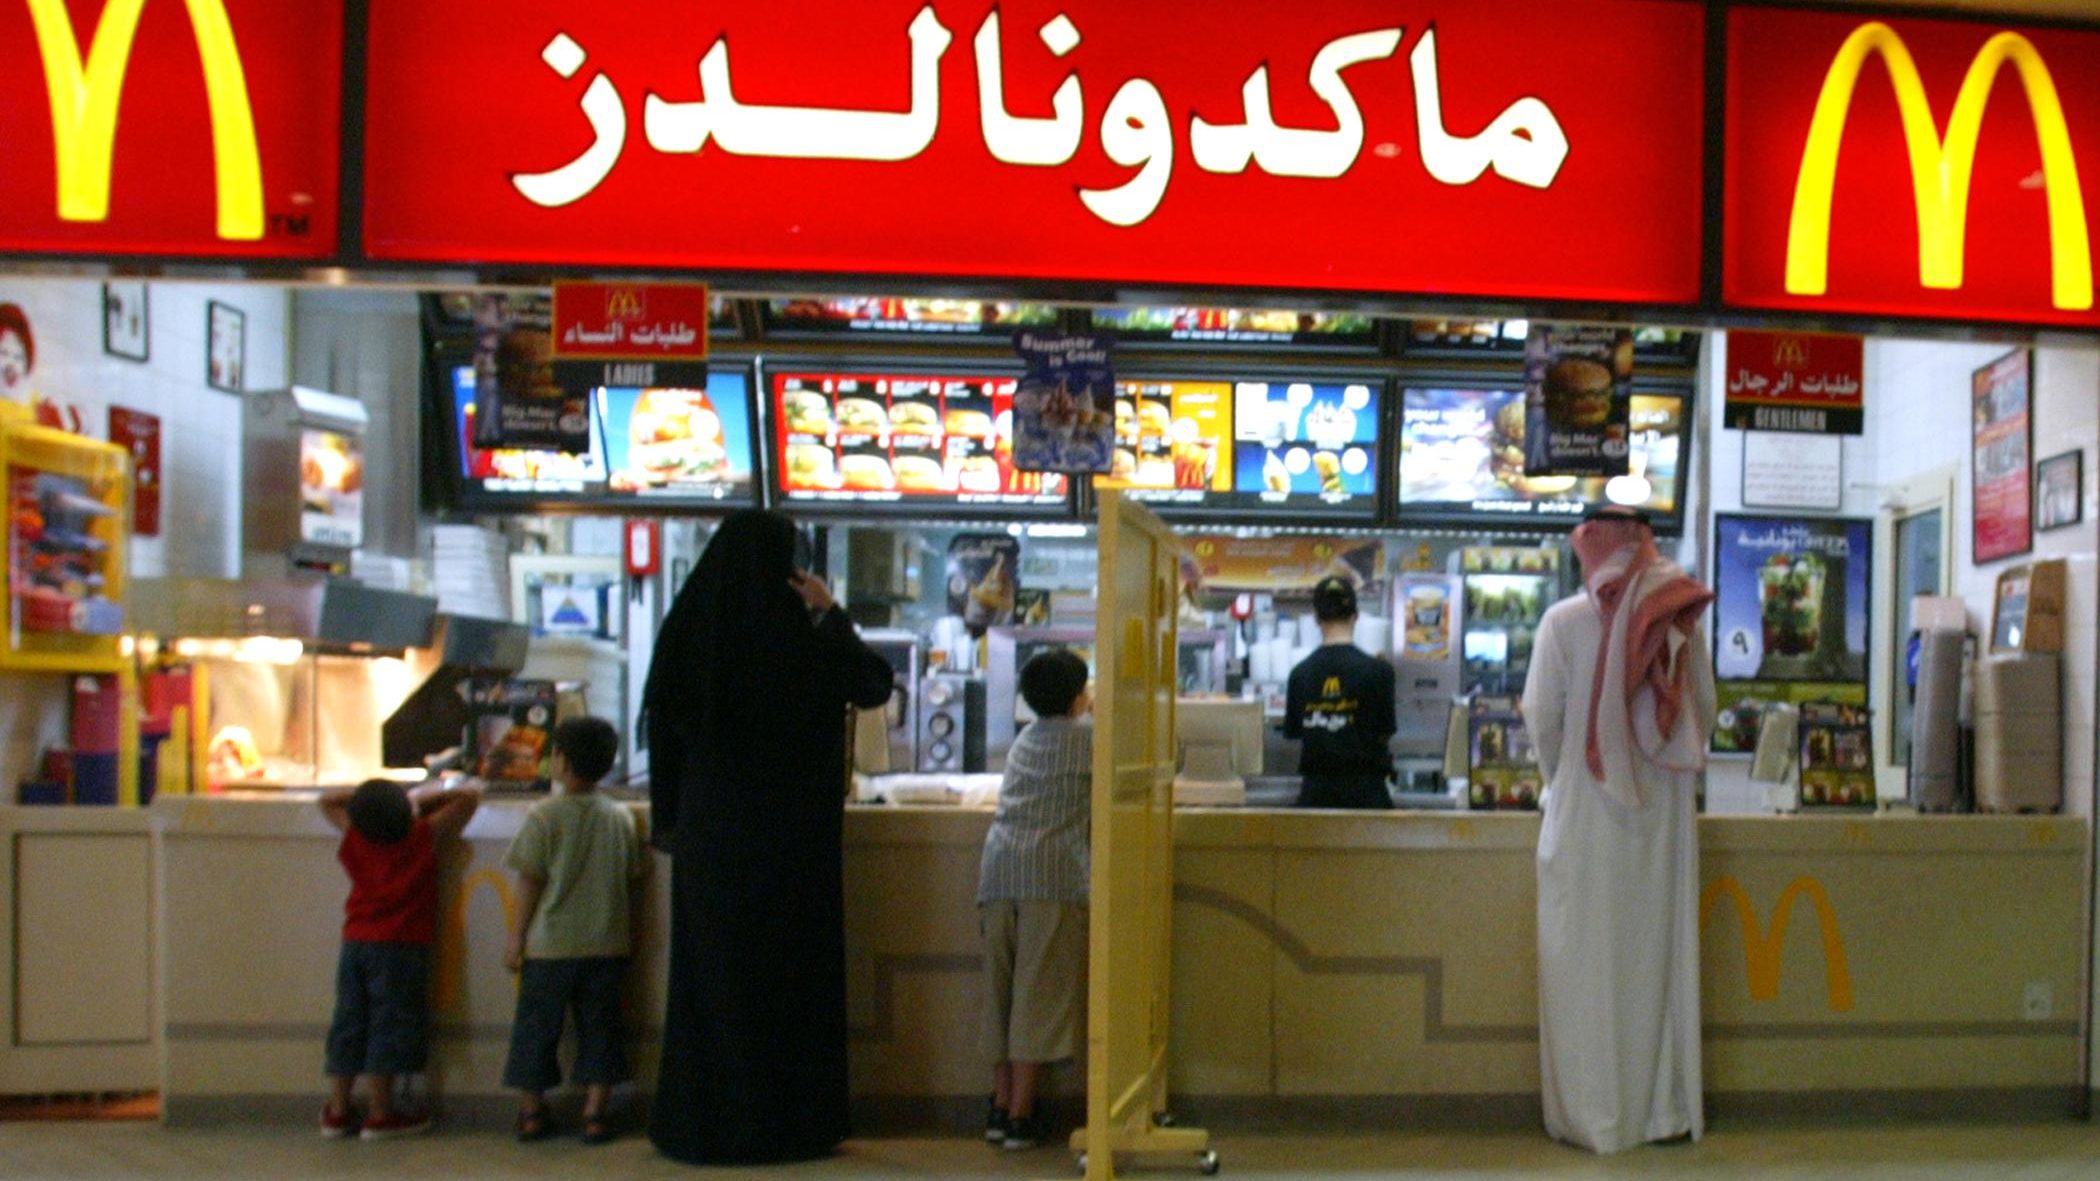 Saudi Gov’t to Allow Mixed-Gender Restaurant Entrances